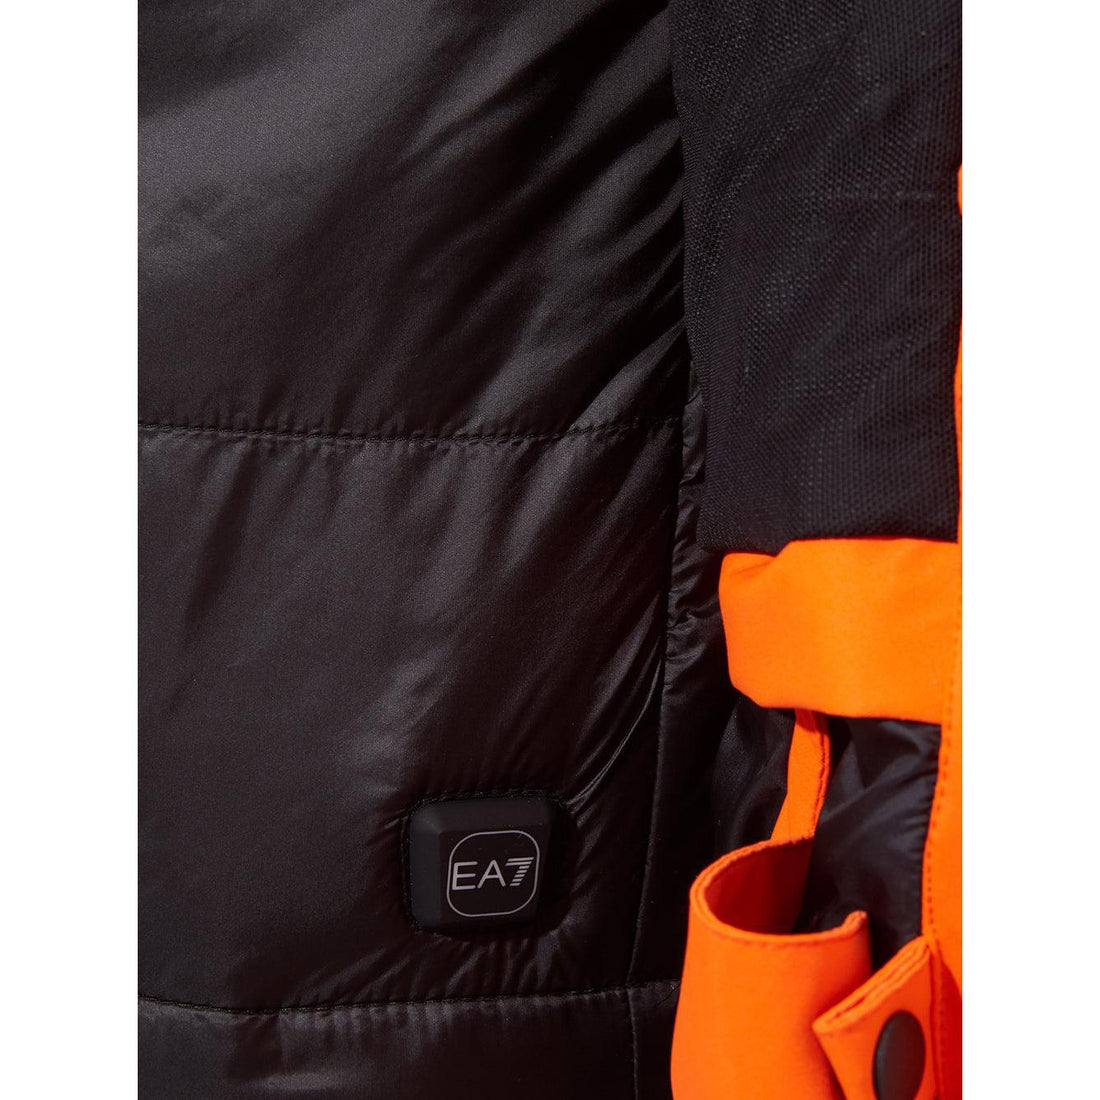 EA7 Emporio Armani Radiant Orange Technical Winter Jacket